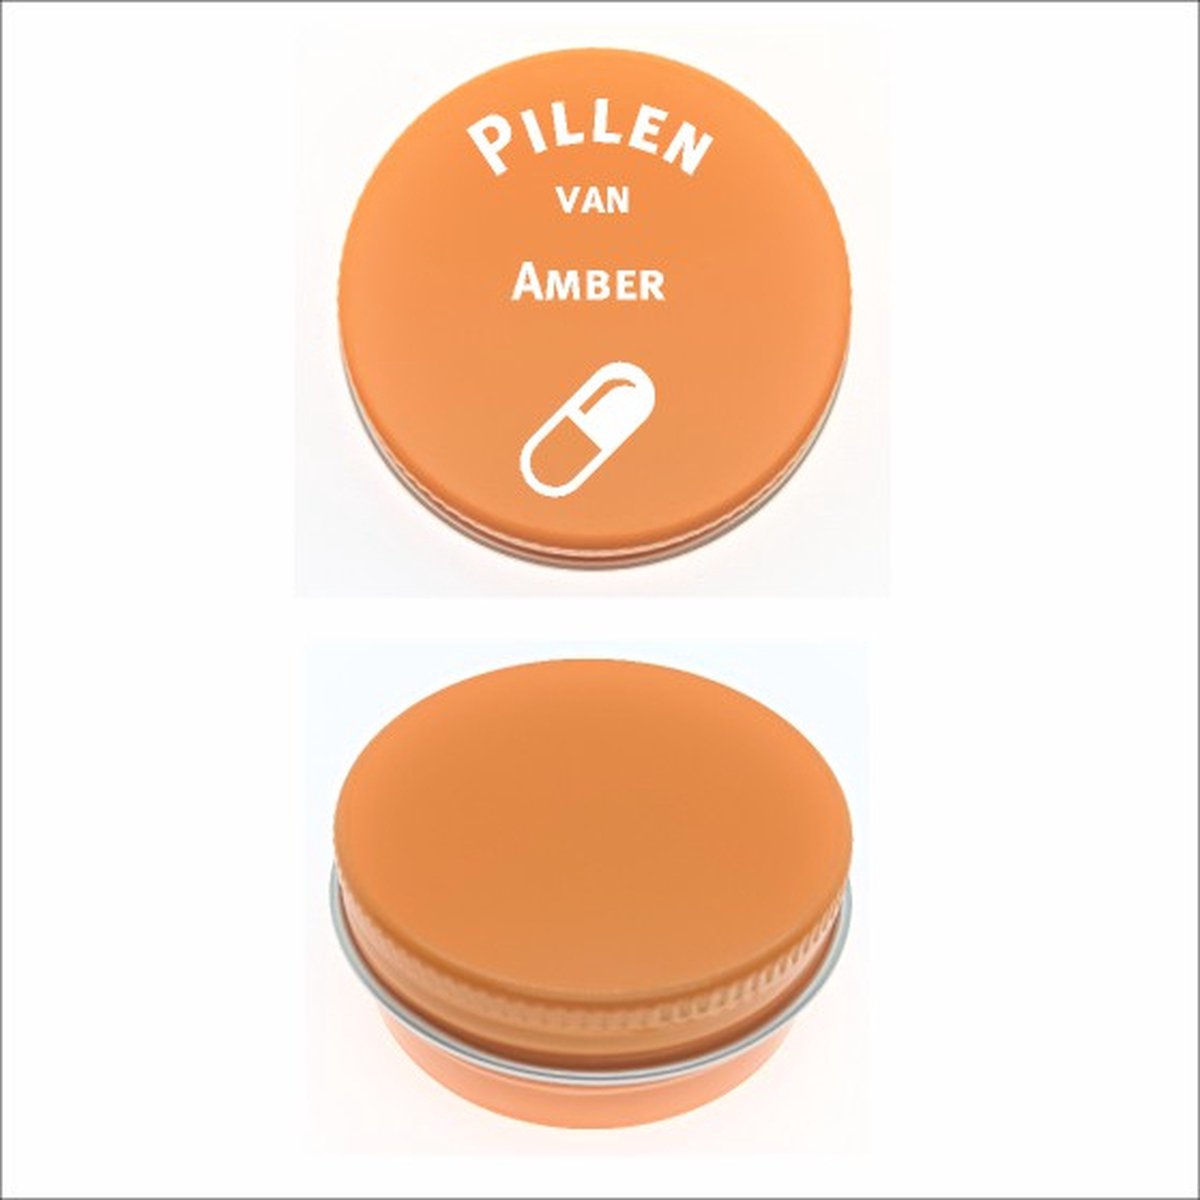 Pillen Blikje Met Naam Gravering - Amber